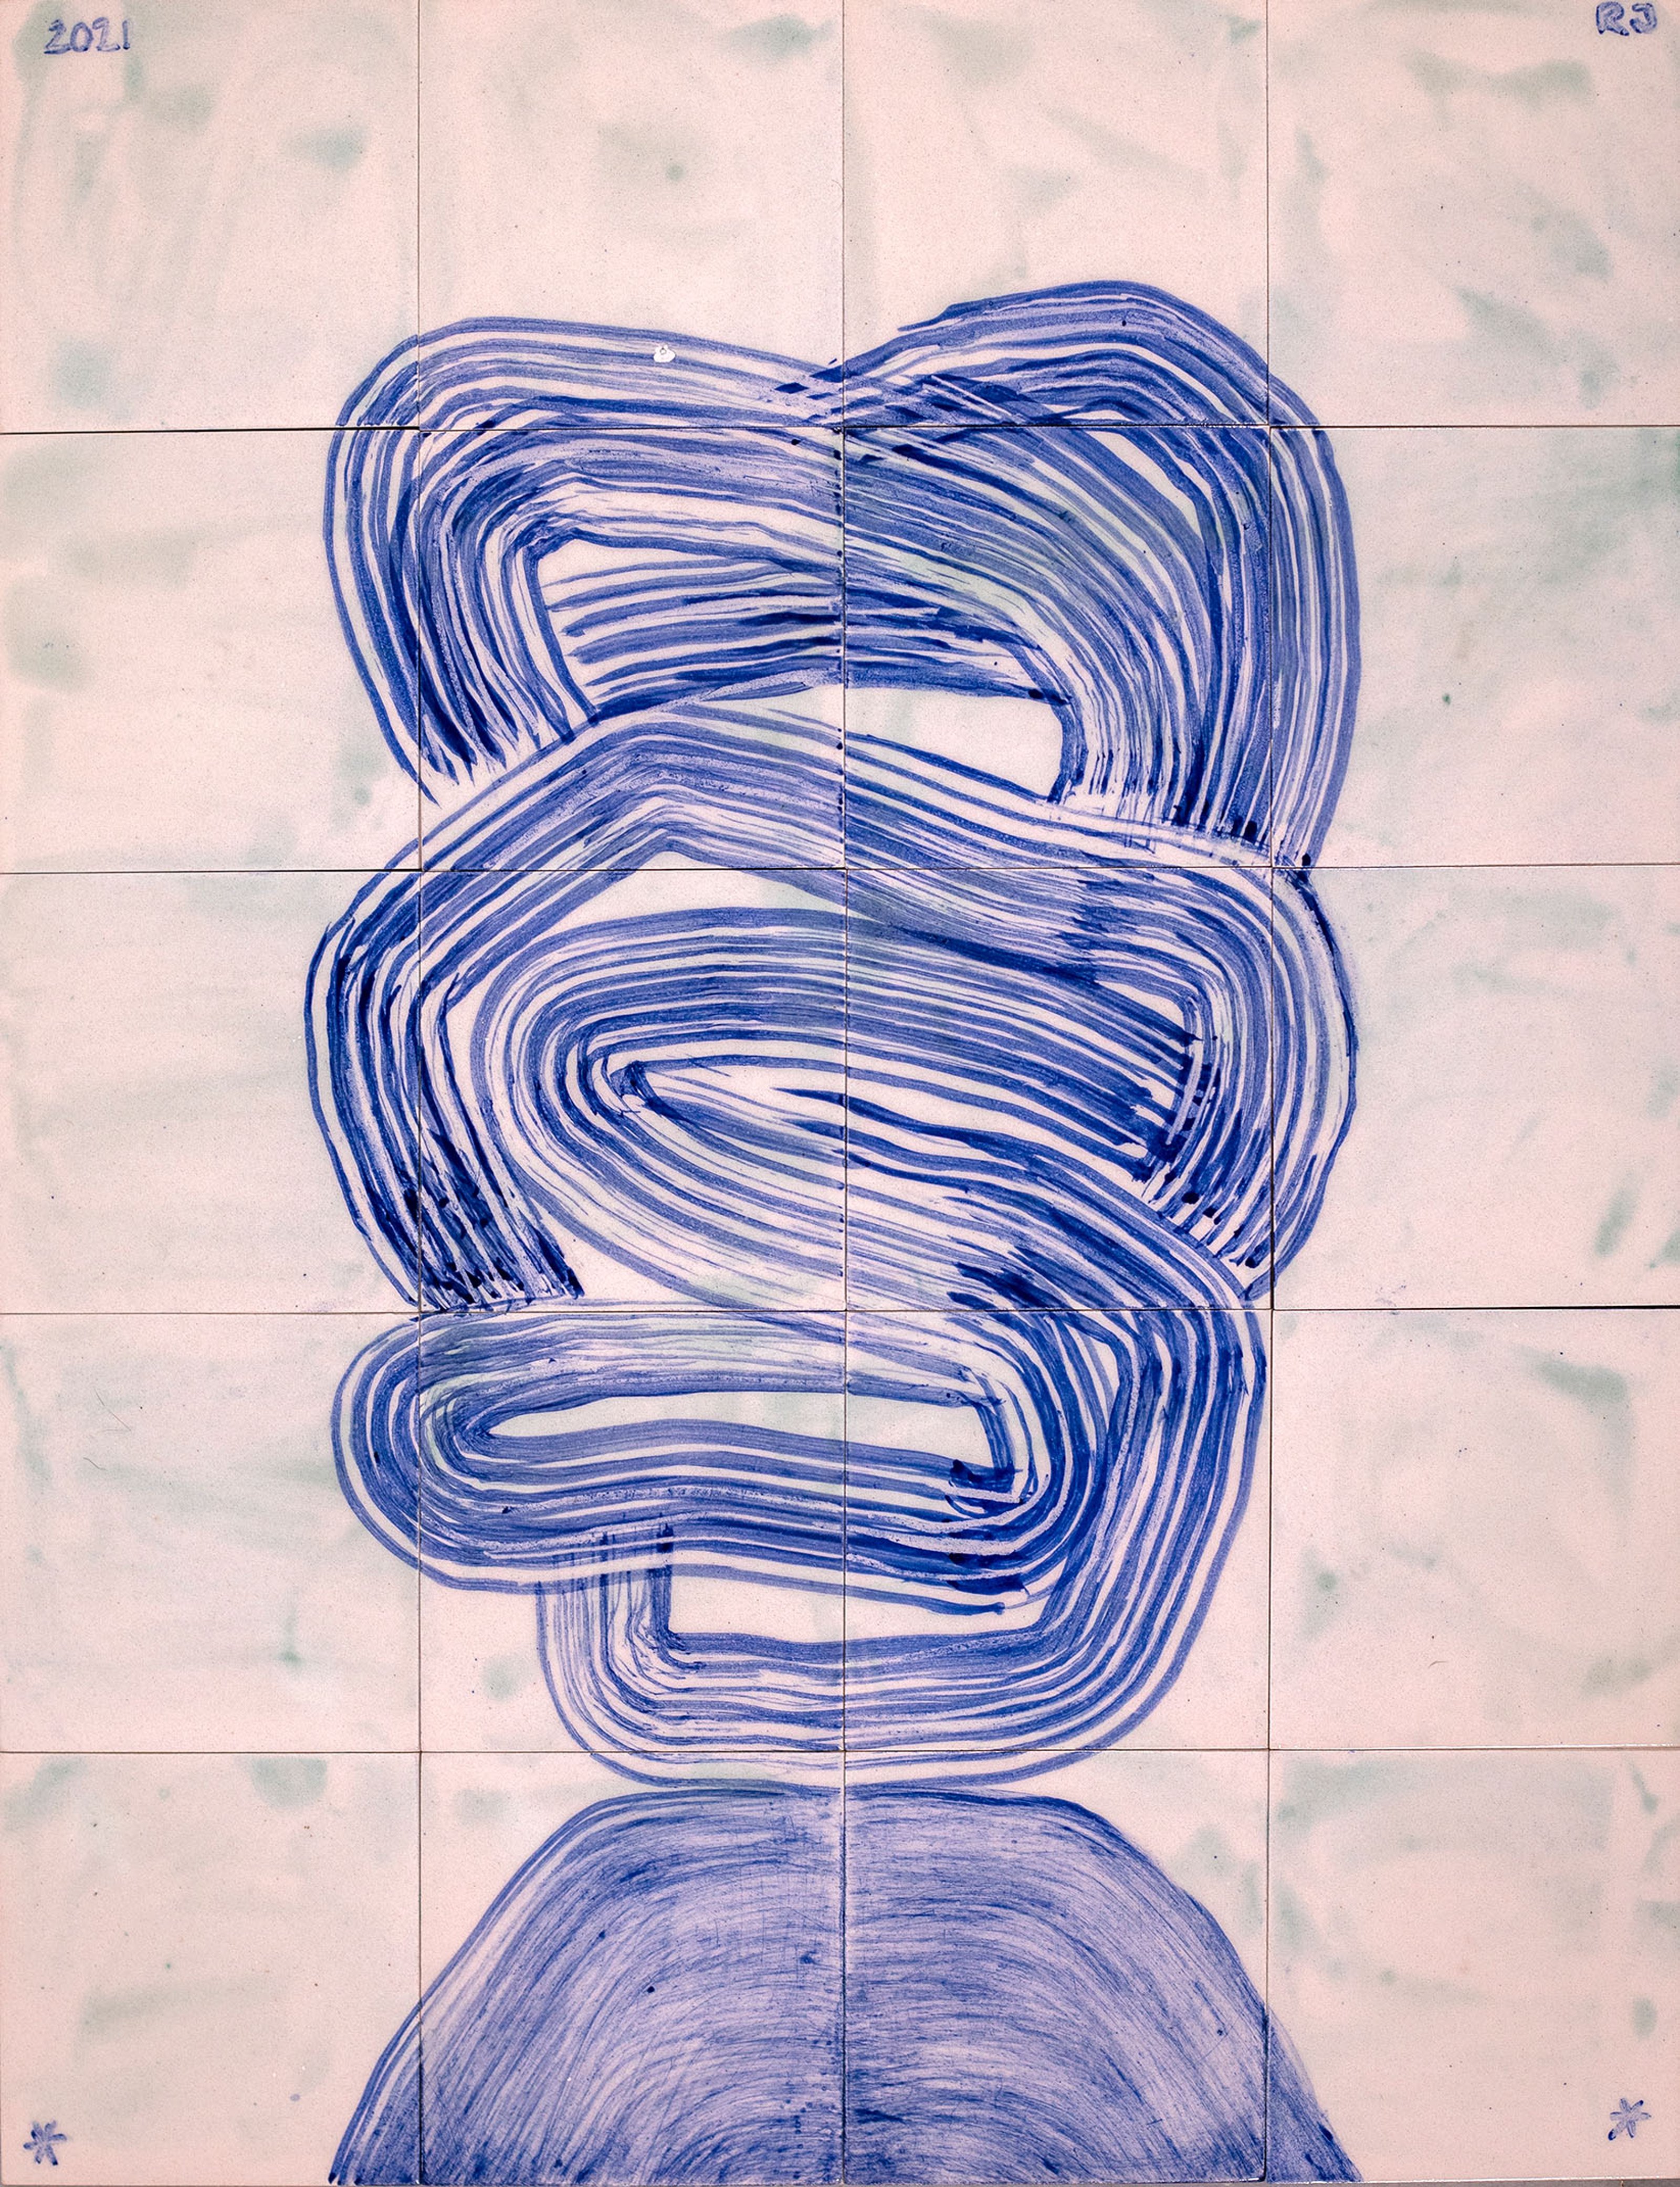 Glaze on ceramic tiles, abstract figure by Robert Janitz